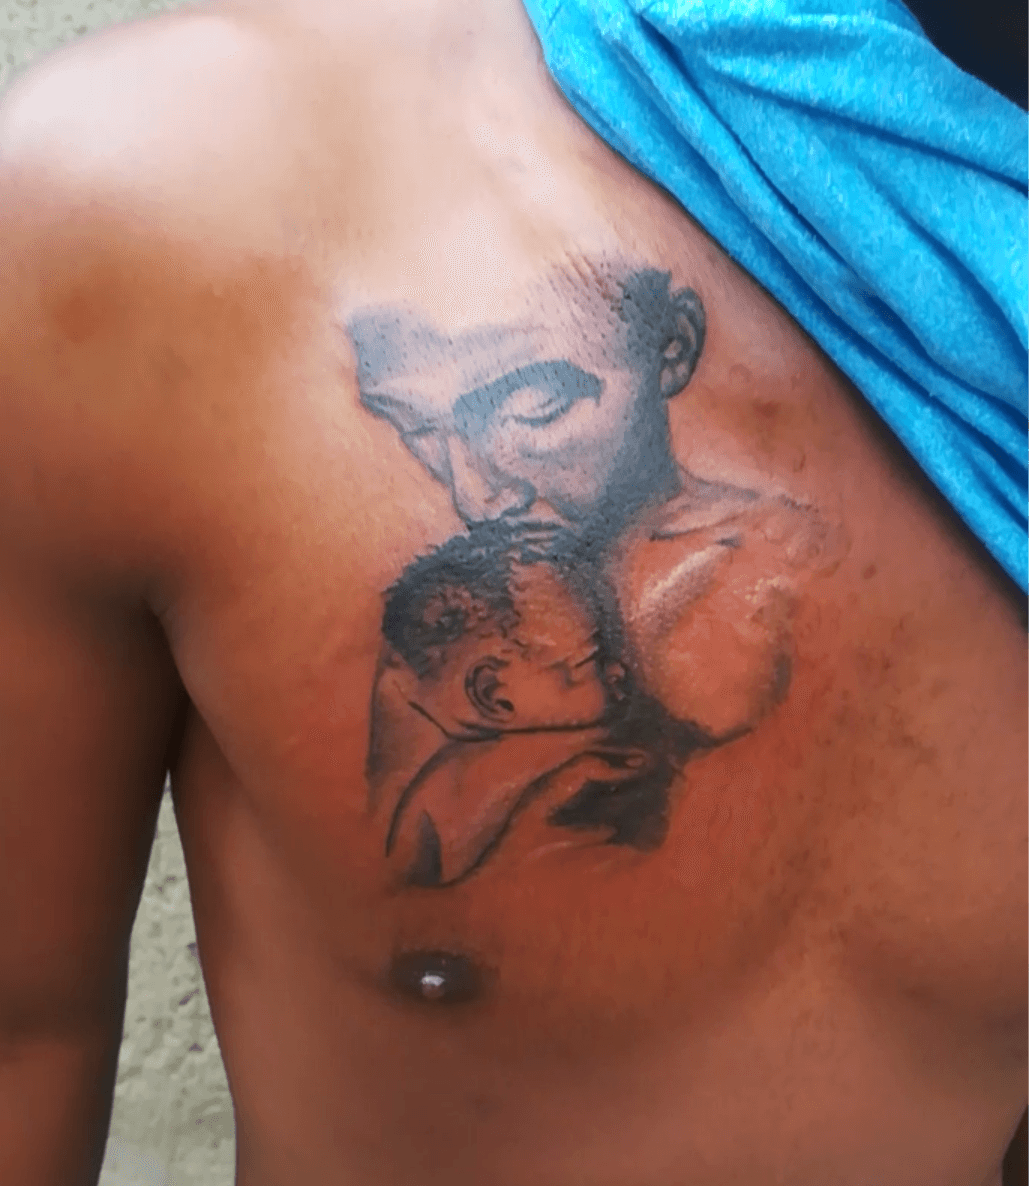 Tattoo of Kiccha Sudeep helps identify body of 25yearold violence victim